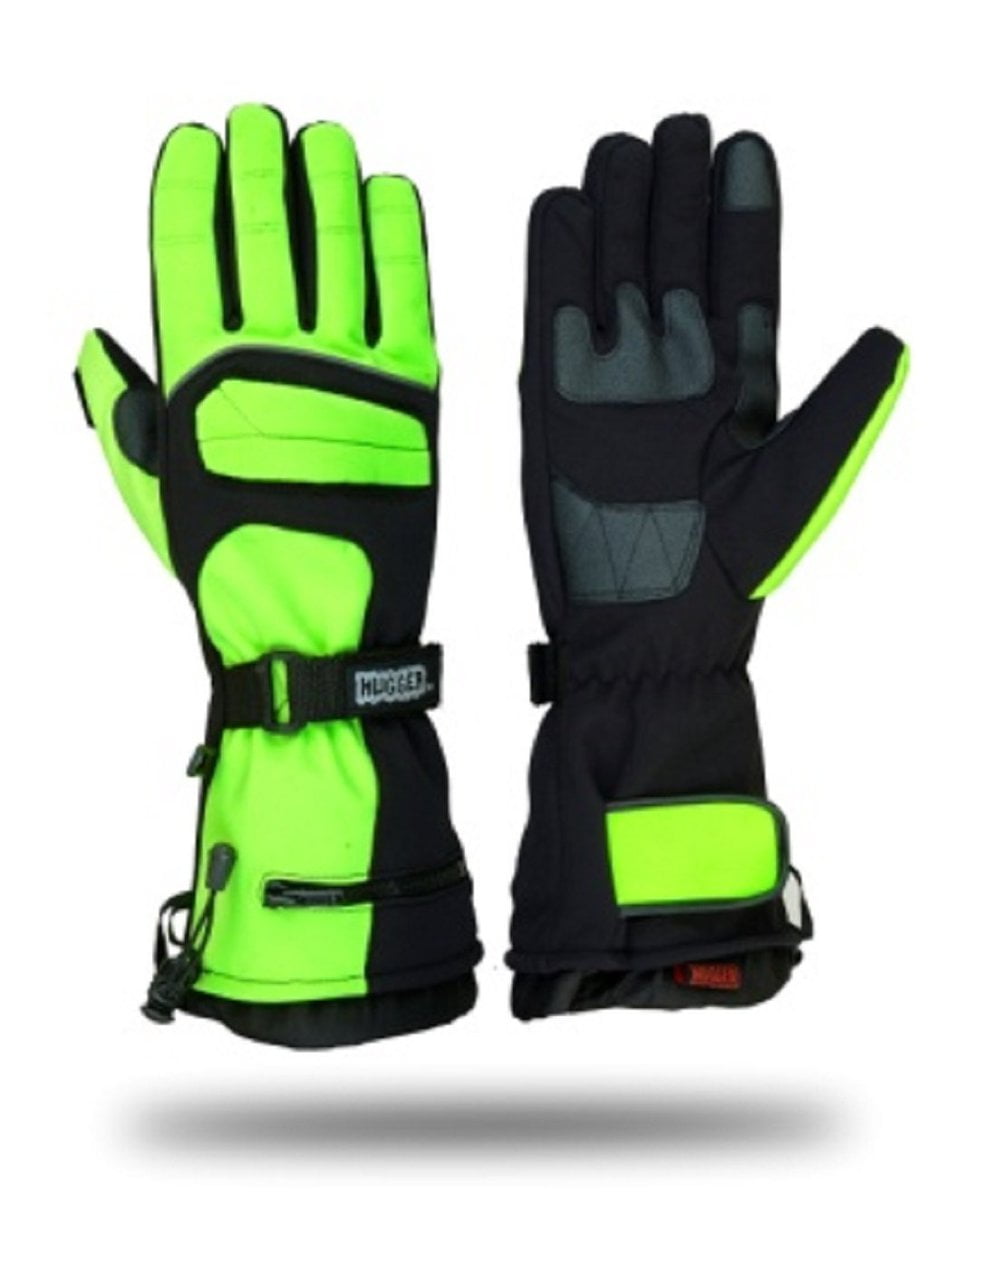 2pair Ski Gloves Men’s Large Waterproof Wind Snowboard Sports winter glove 